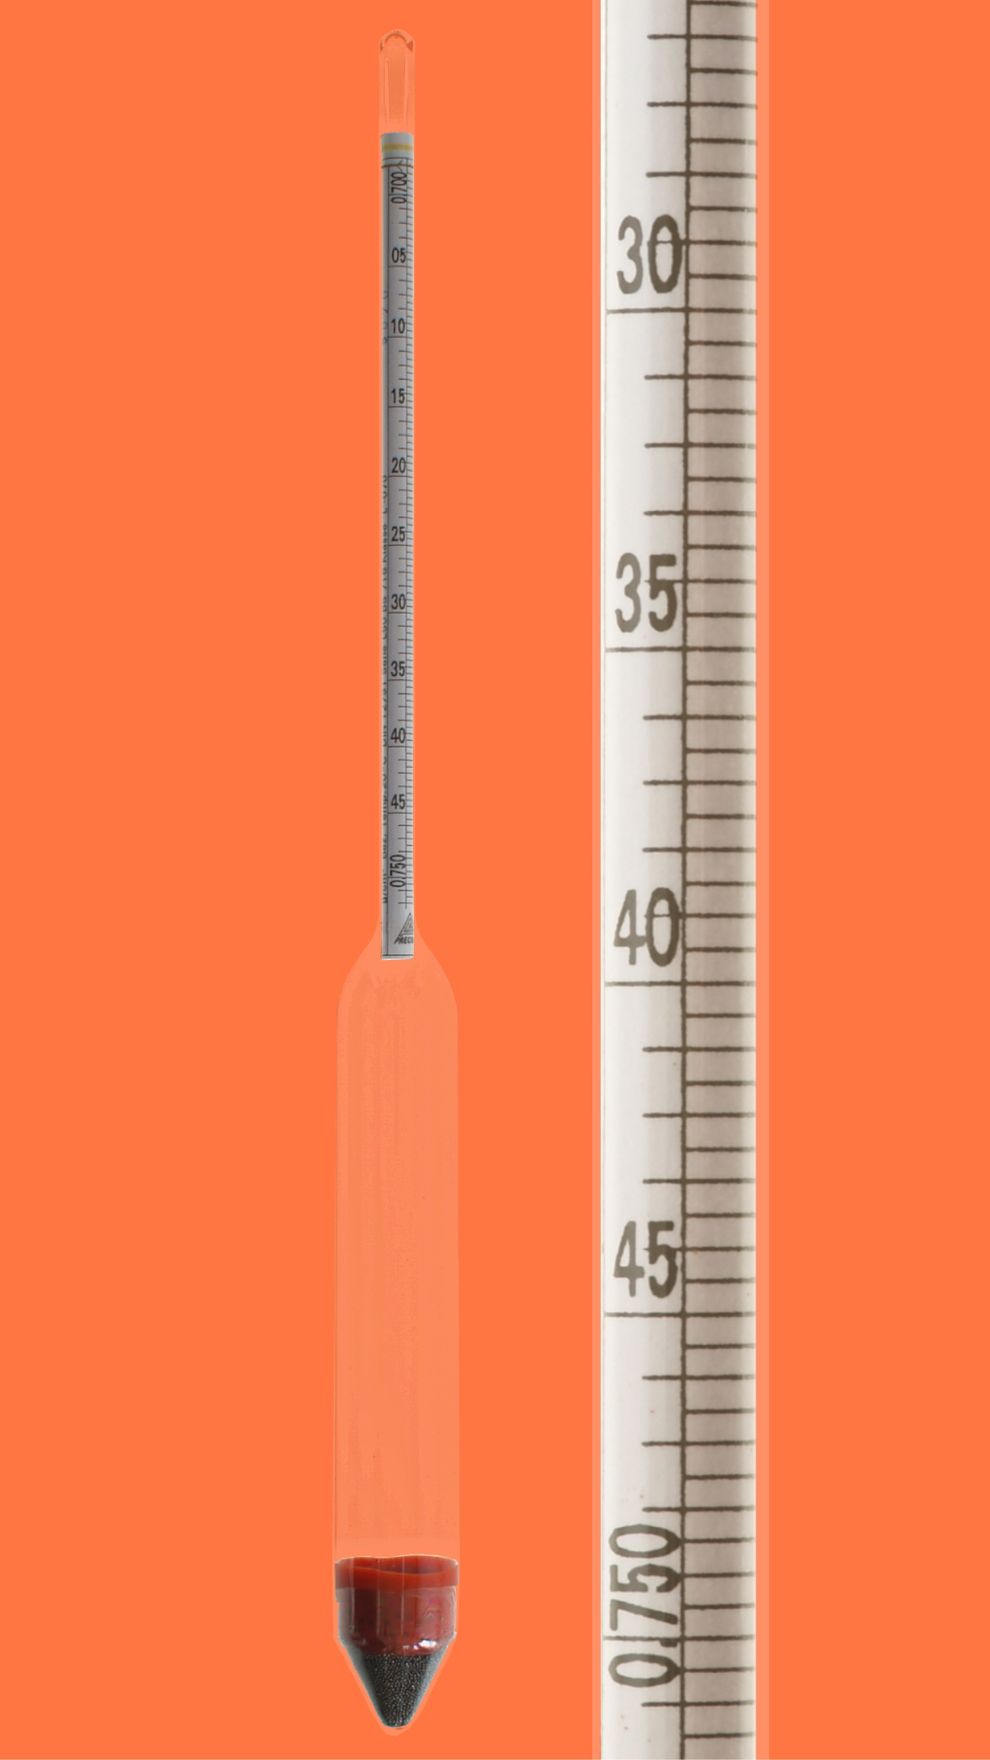 Aräometer, DIN 12791, L50, 1,35-1,40:0,0005g/cm³, Bezugstemp. 20°C, ohne Thermometer